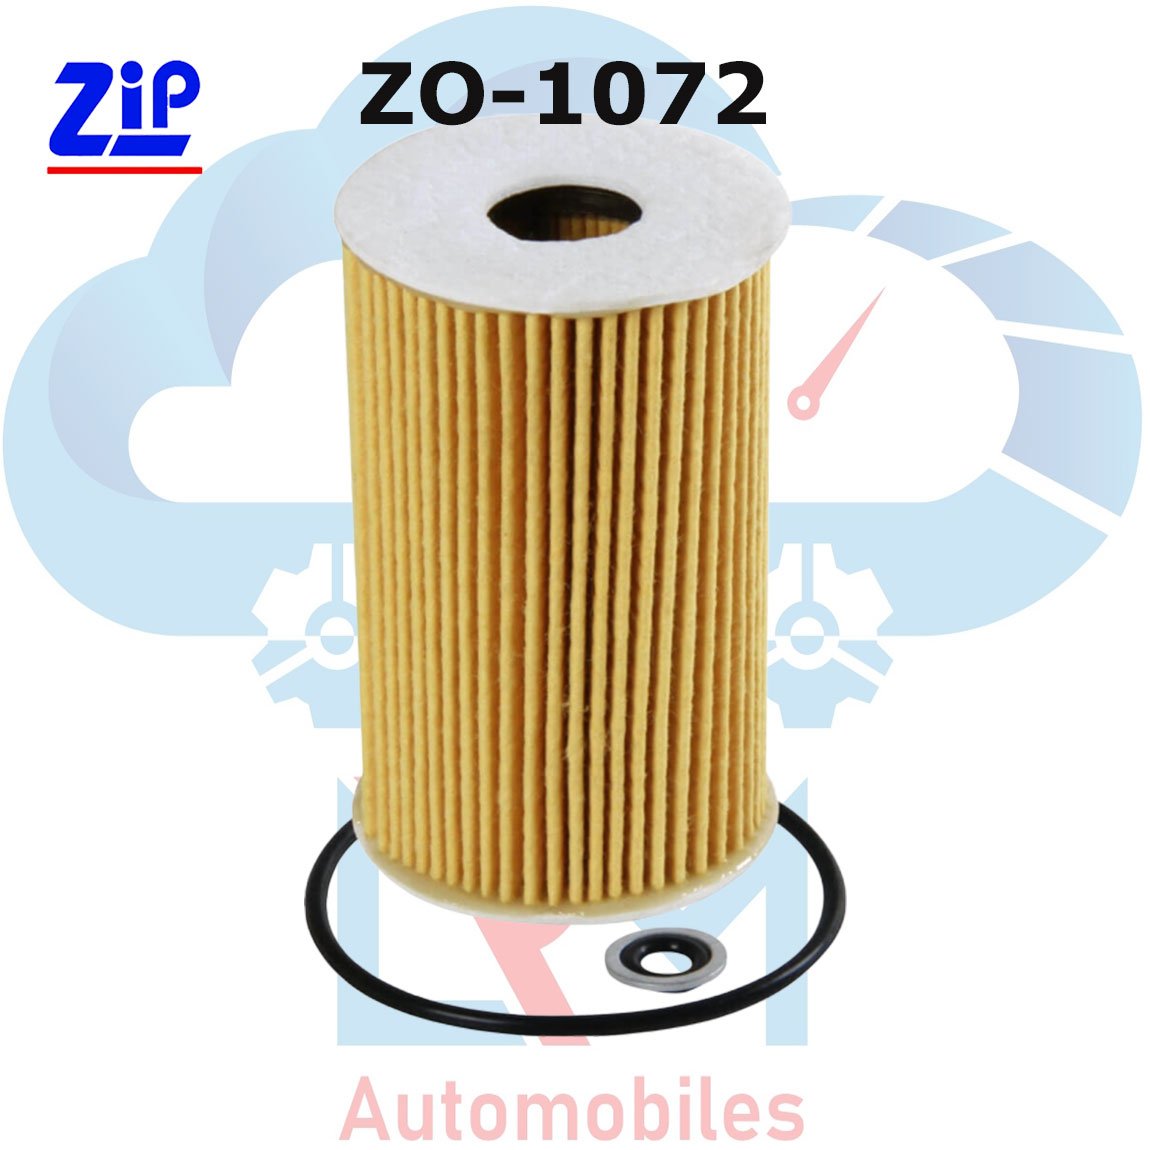 Oil Filter For Hyundai i20 in Zip Filter